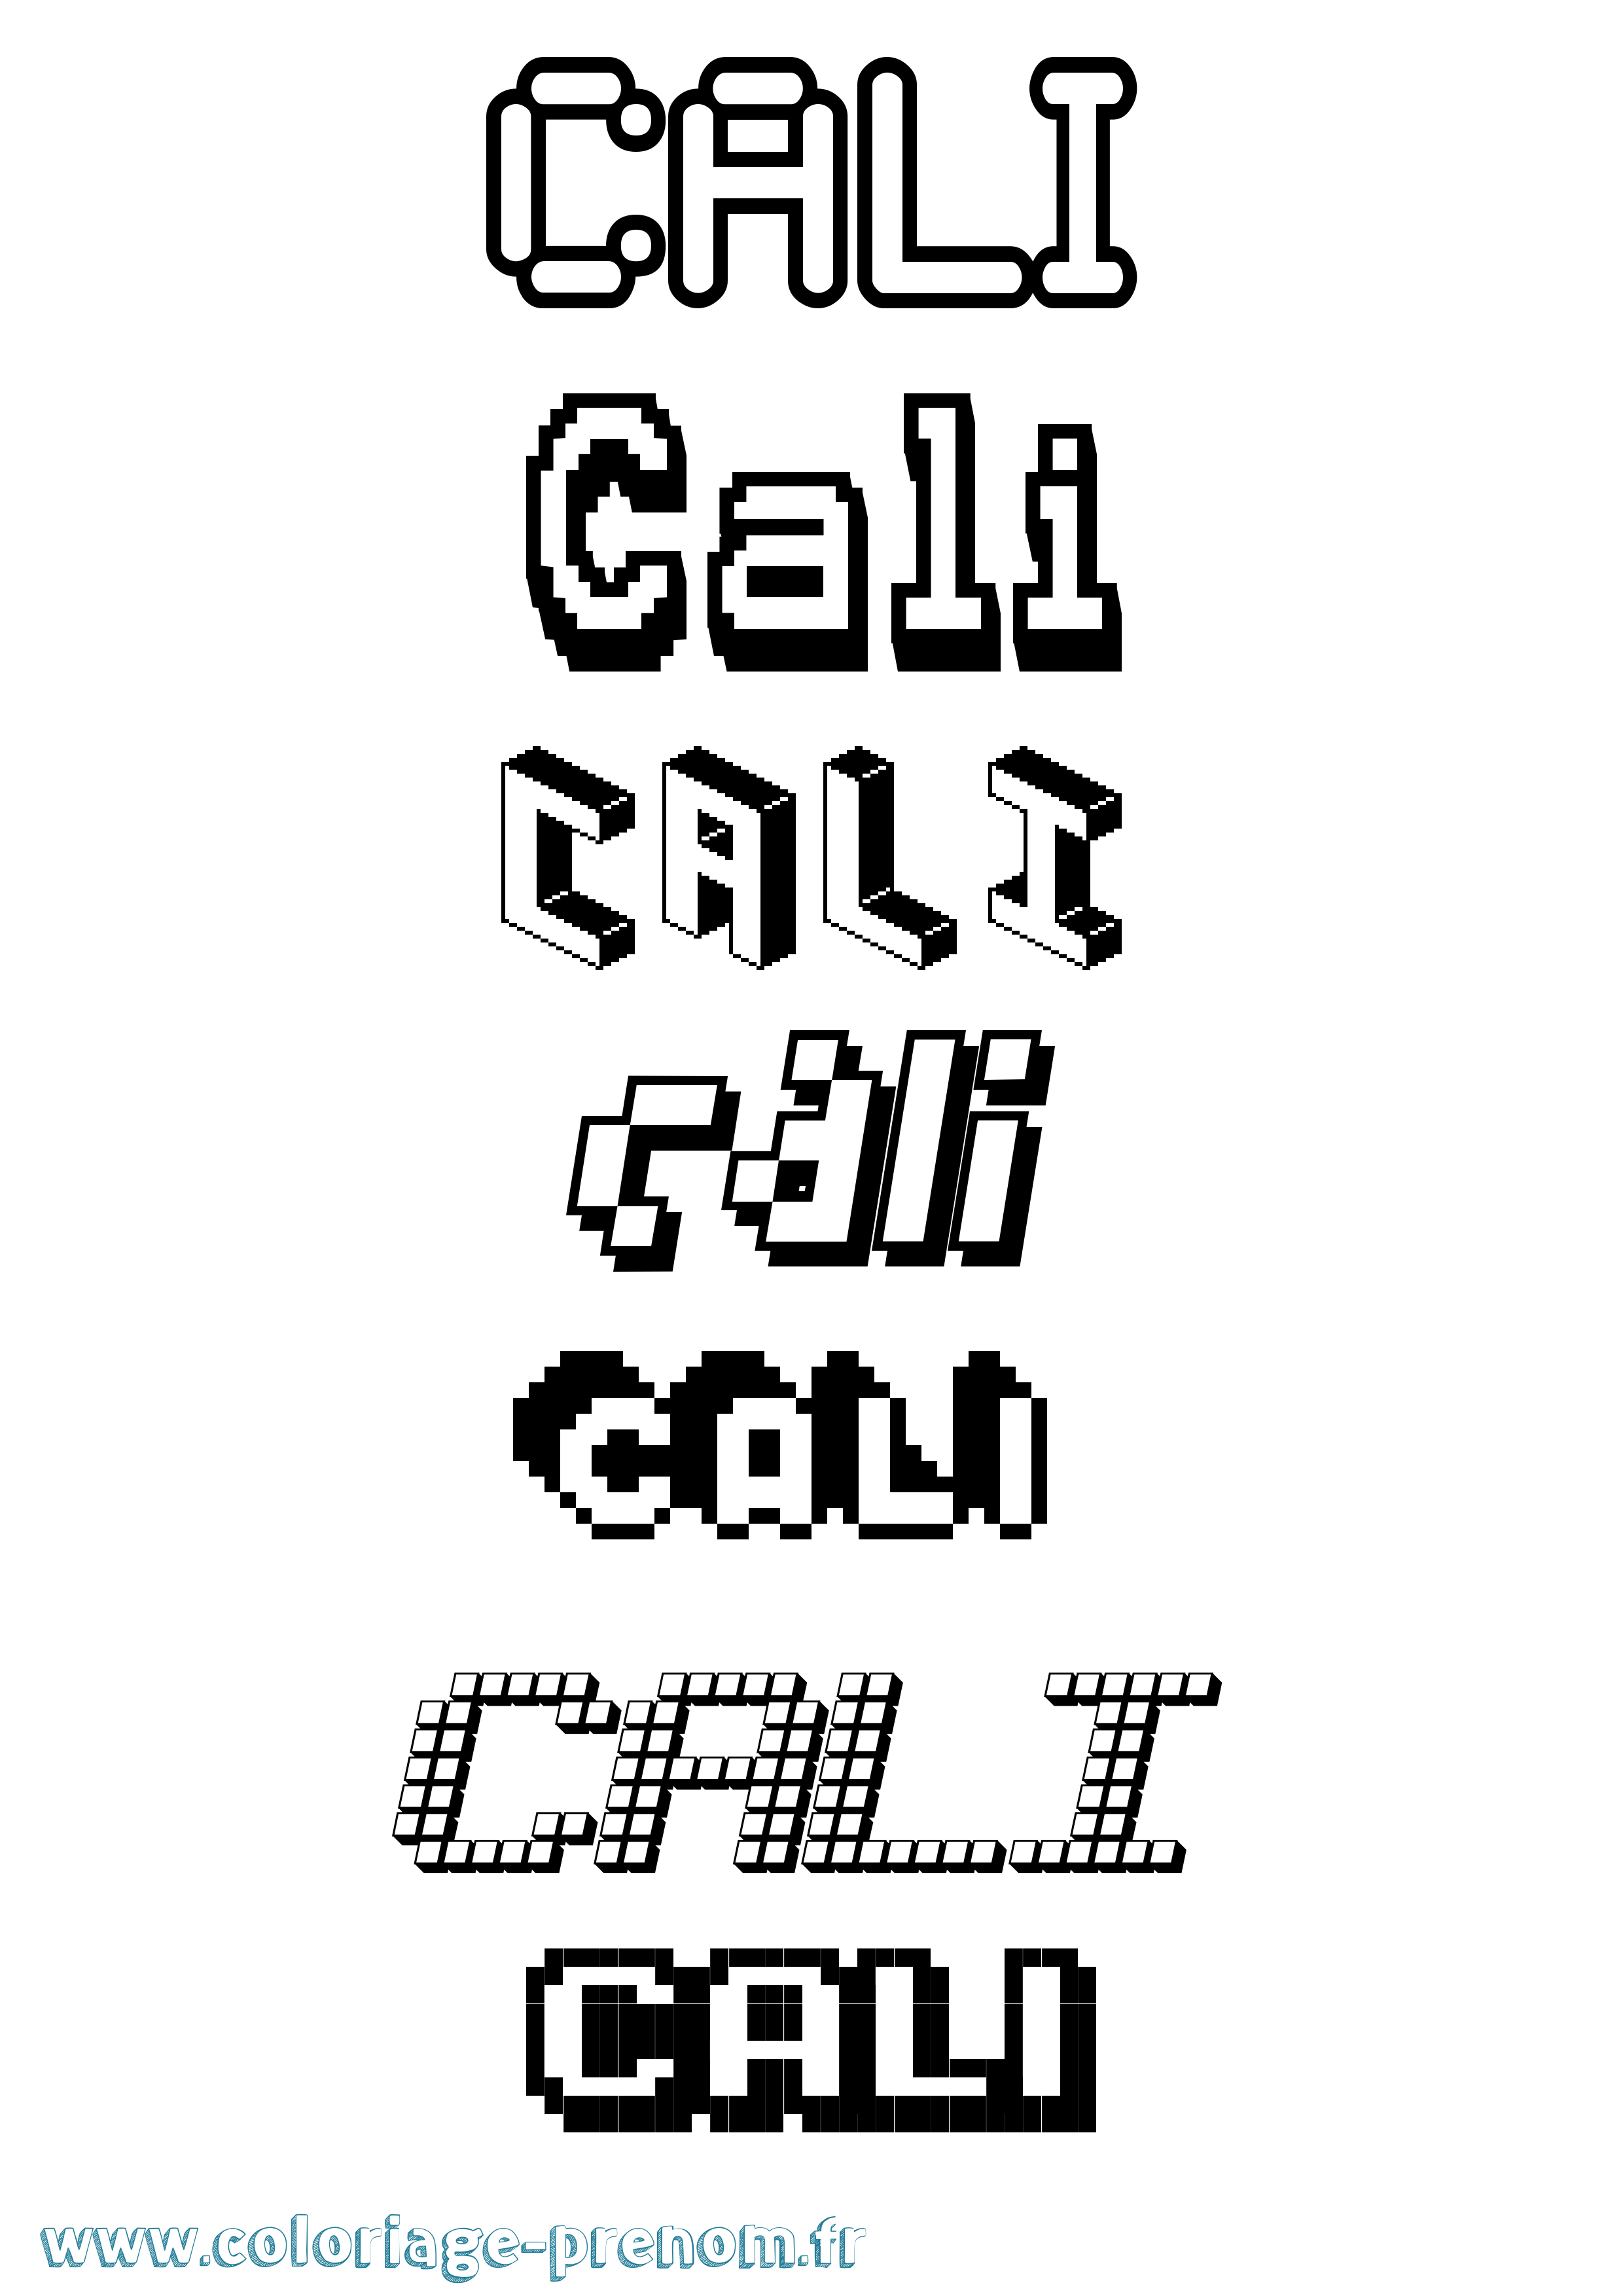 Coloriage prénom Cali Pixel